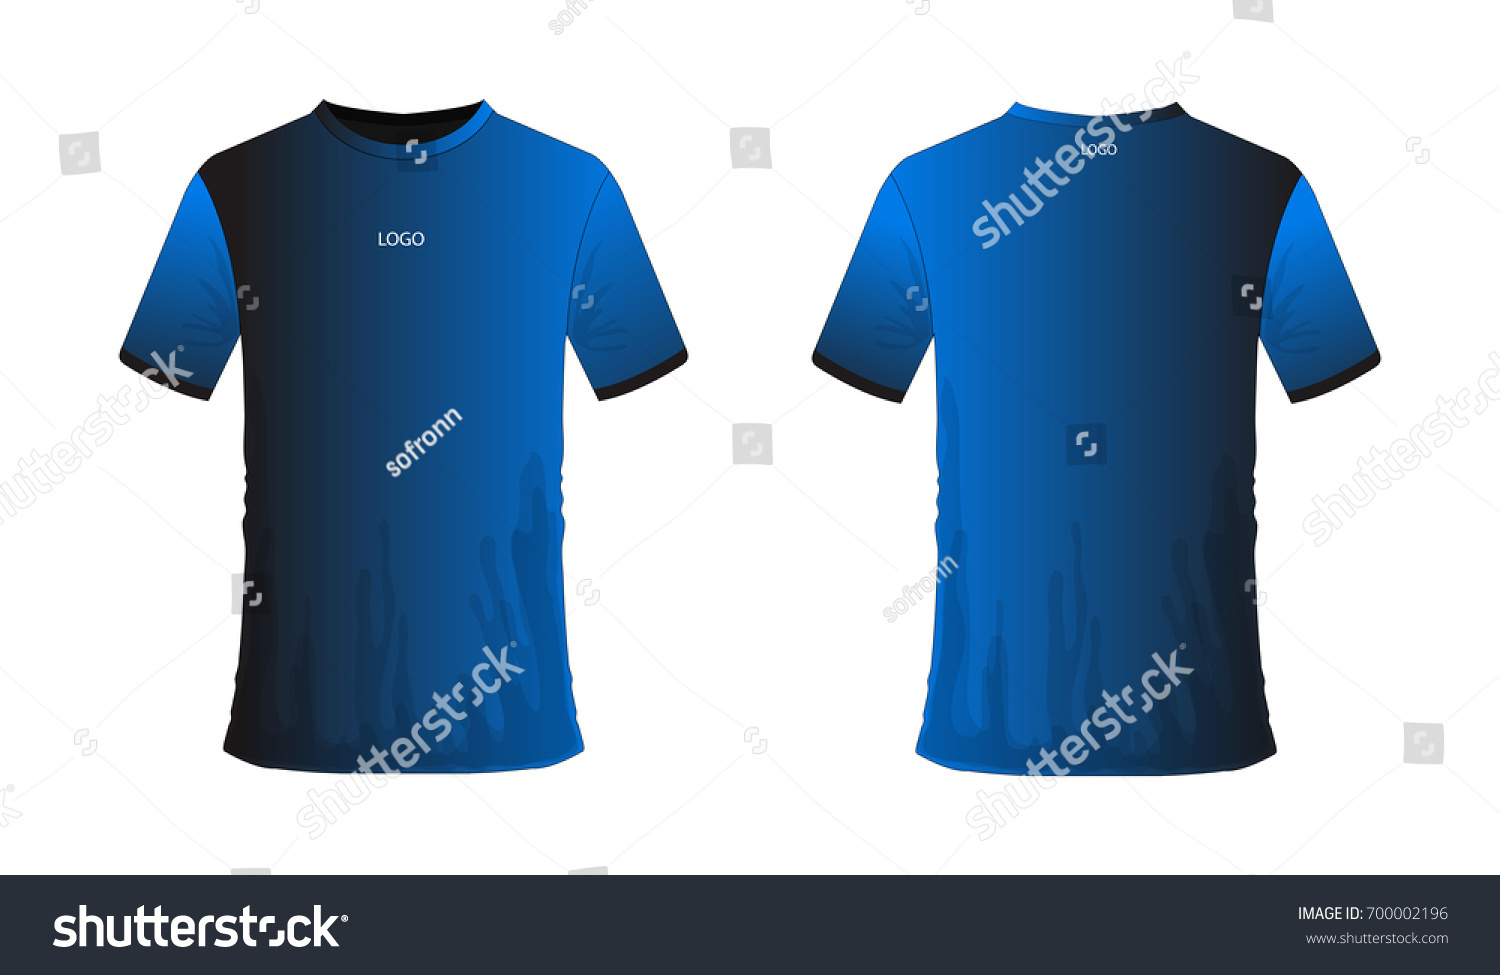 Tshirt Blue Black Soccer Football Template Stock Vector 700002196 ...